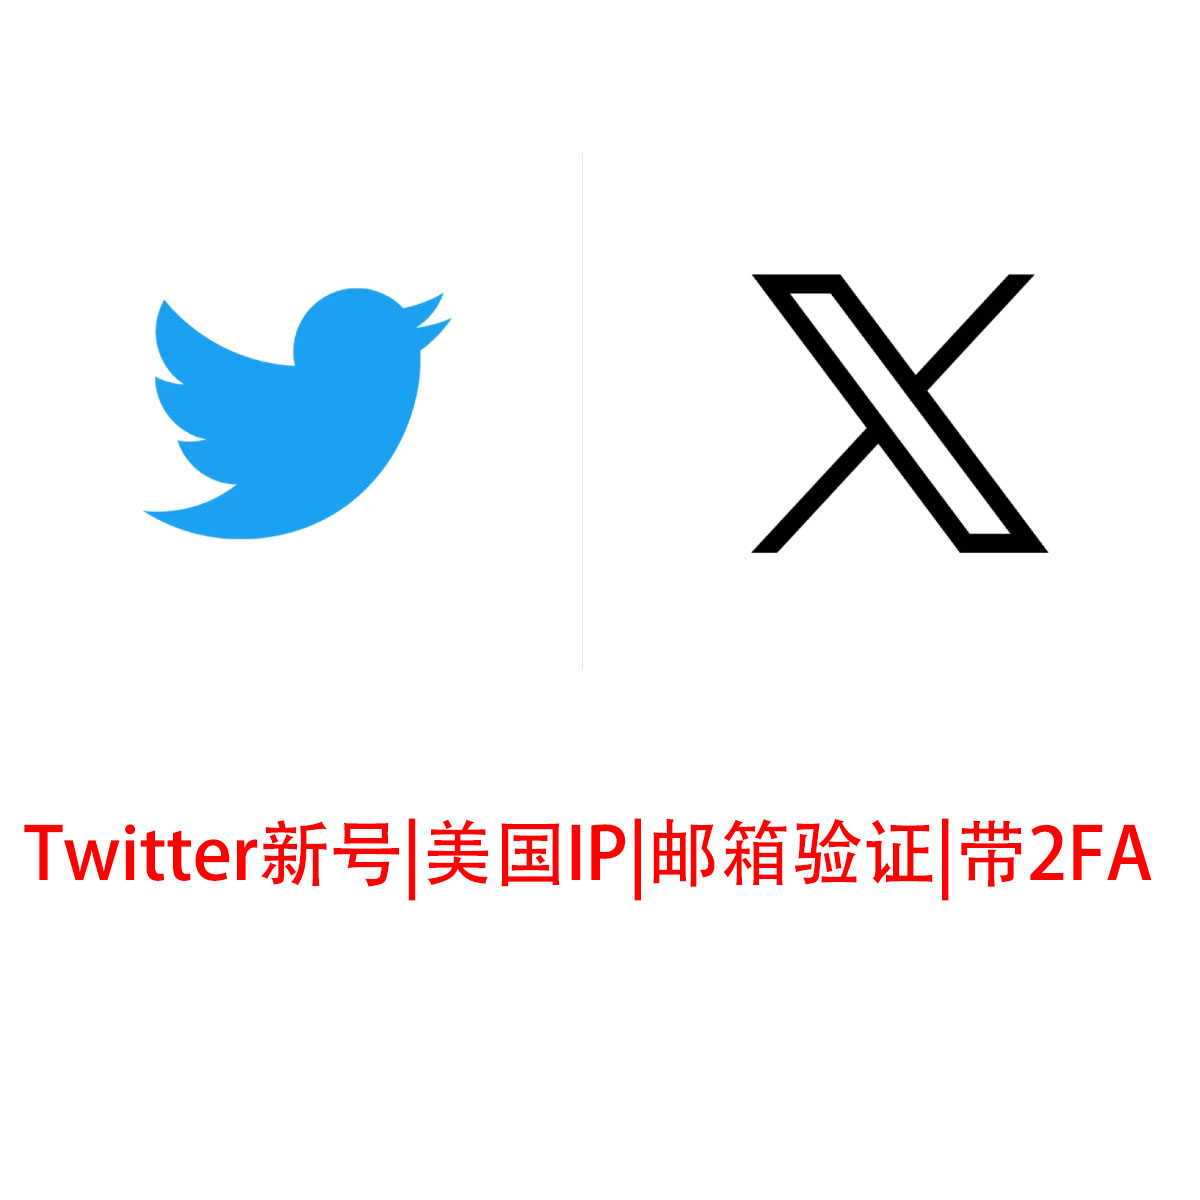 X-Twitter|美国IP账号